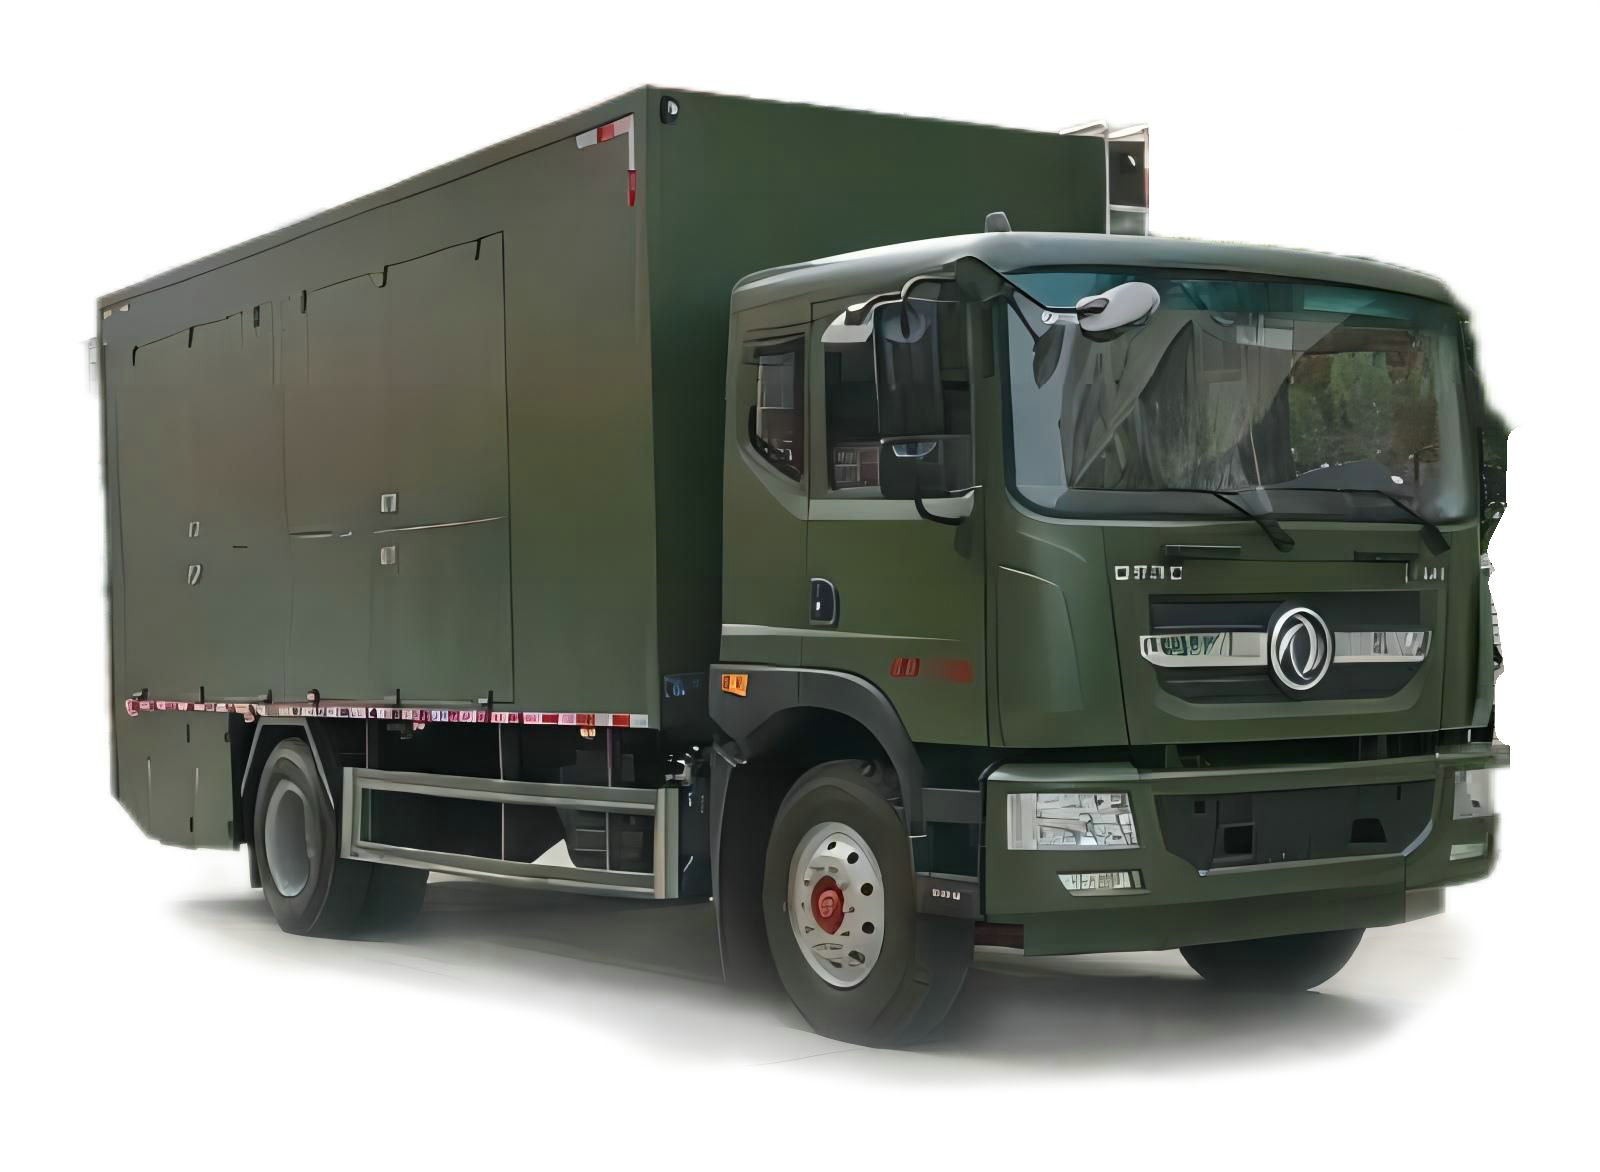 Customizing Dollicar D9 Mobile Laundry Truck